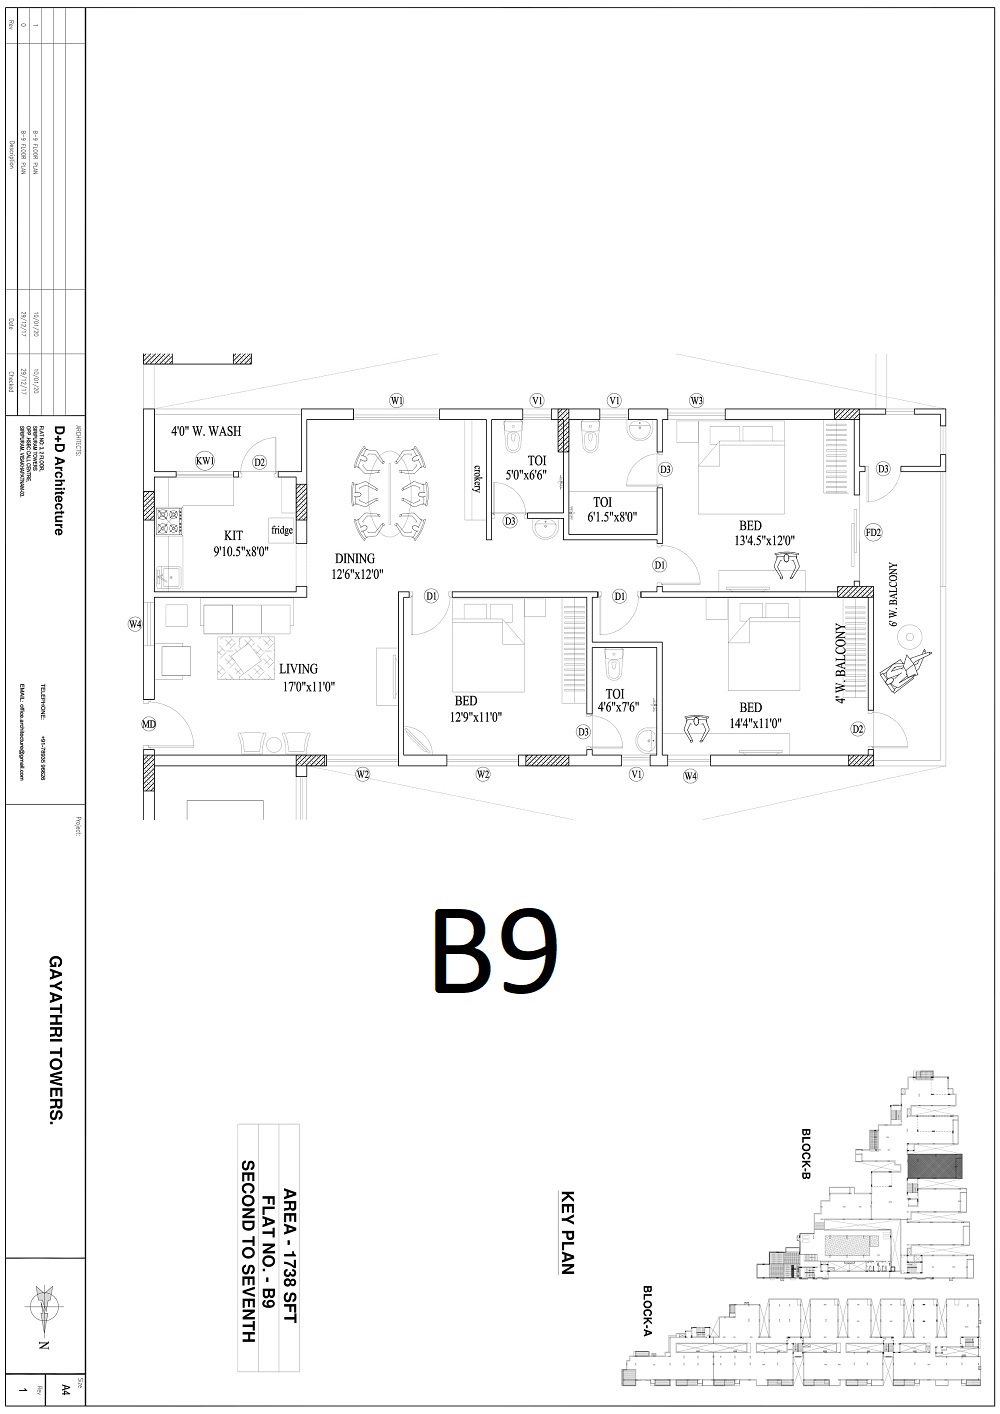 B9 - Tipcal Floor Plan